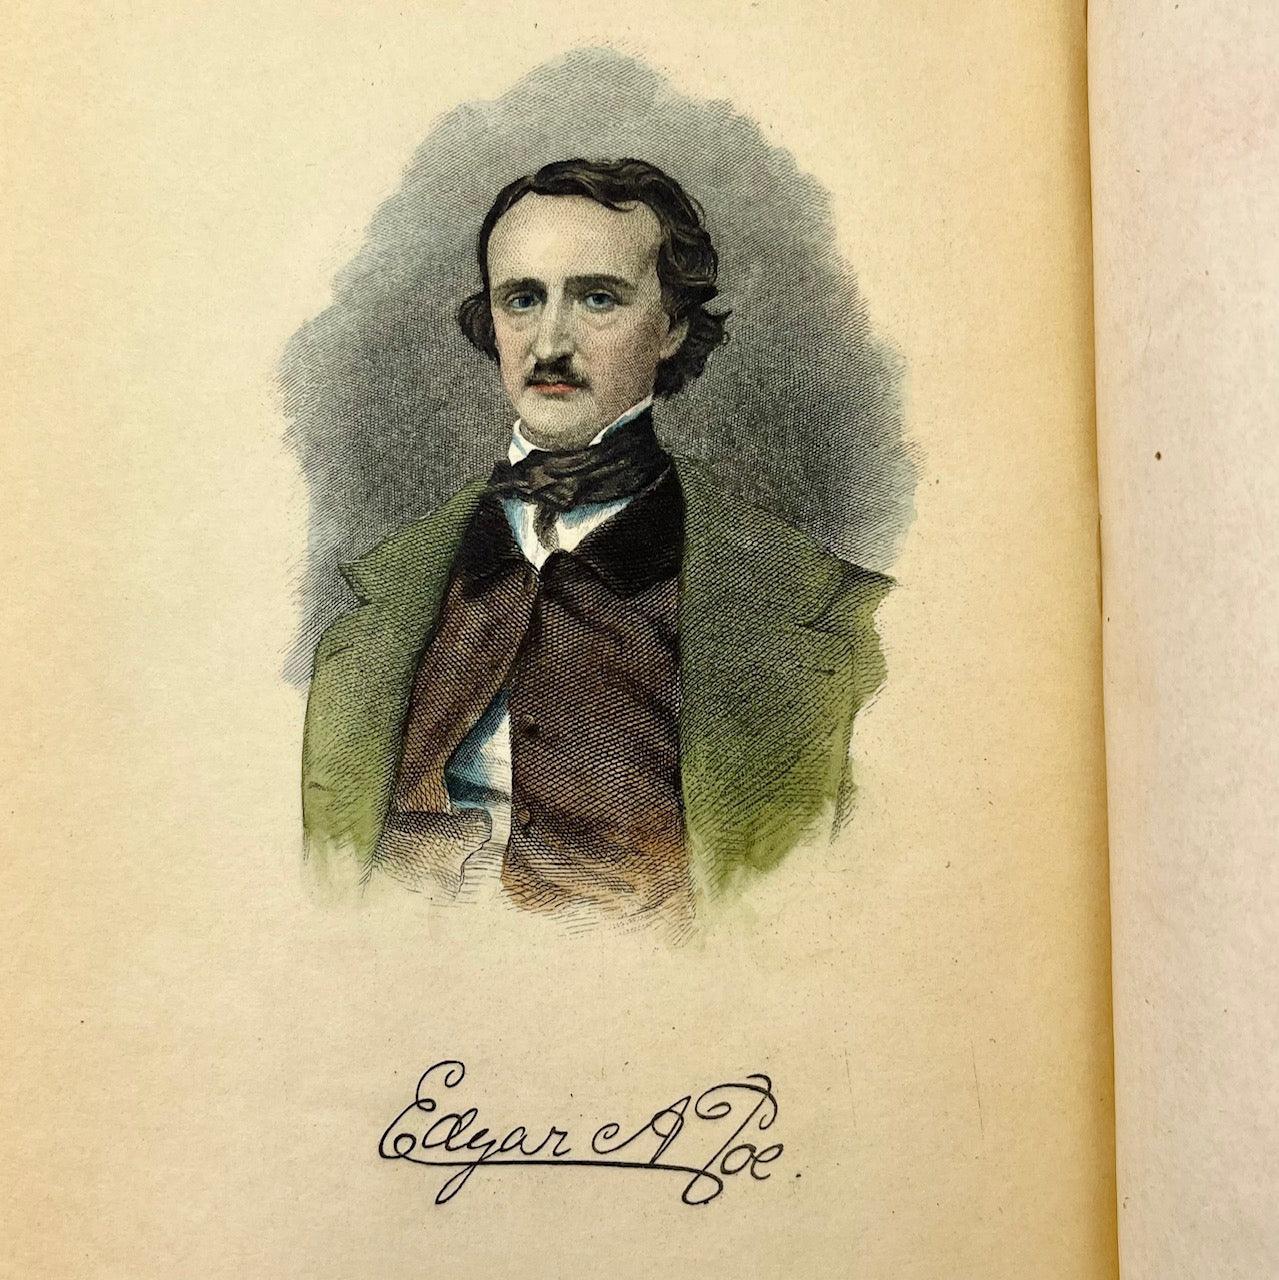 The Complete Works of Edgar Allan Poe (10 volumes, complete) - Grinning Cat Books - LITERATURE - EDGAR ALLAN POE